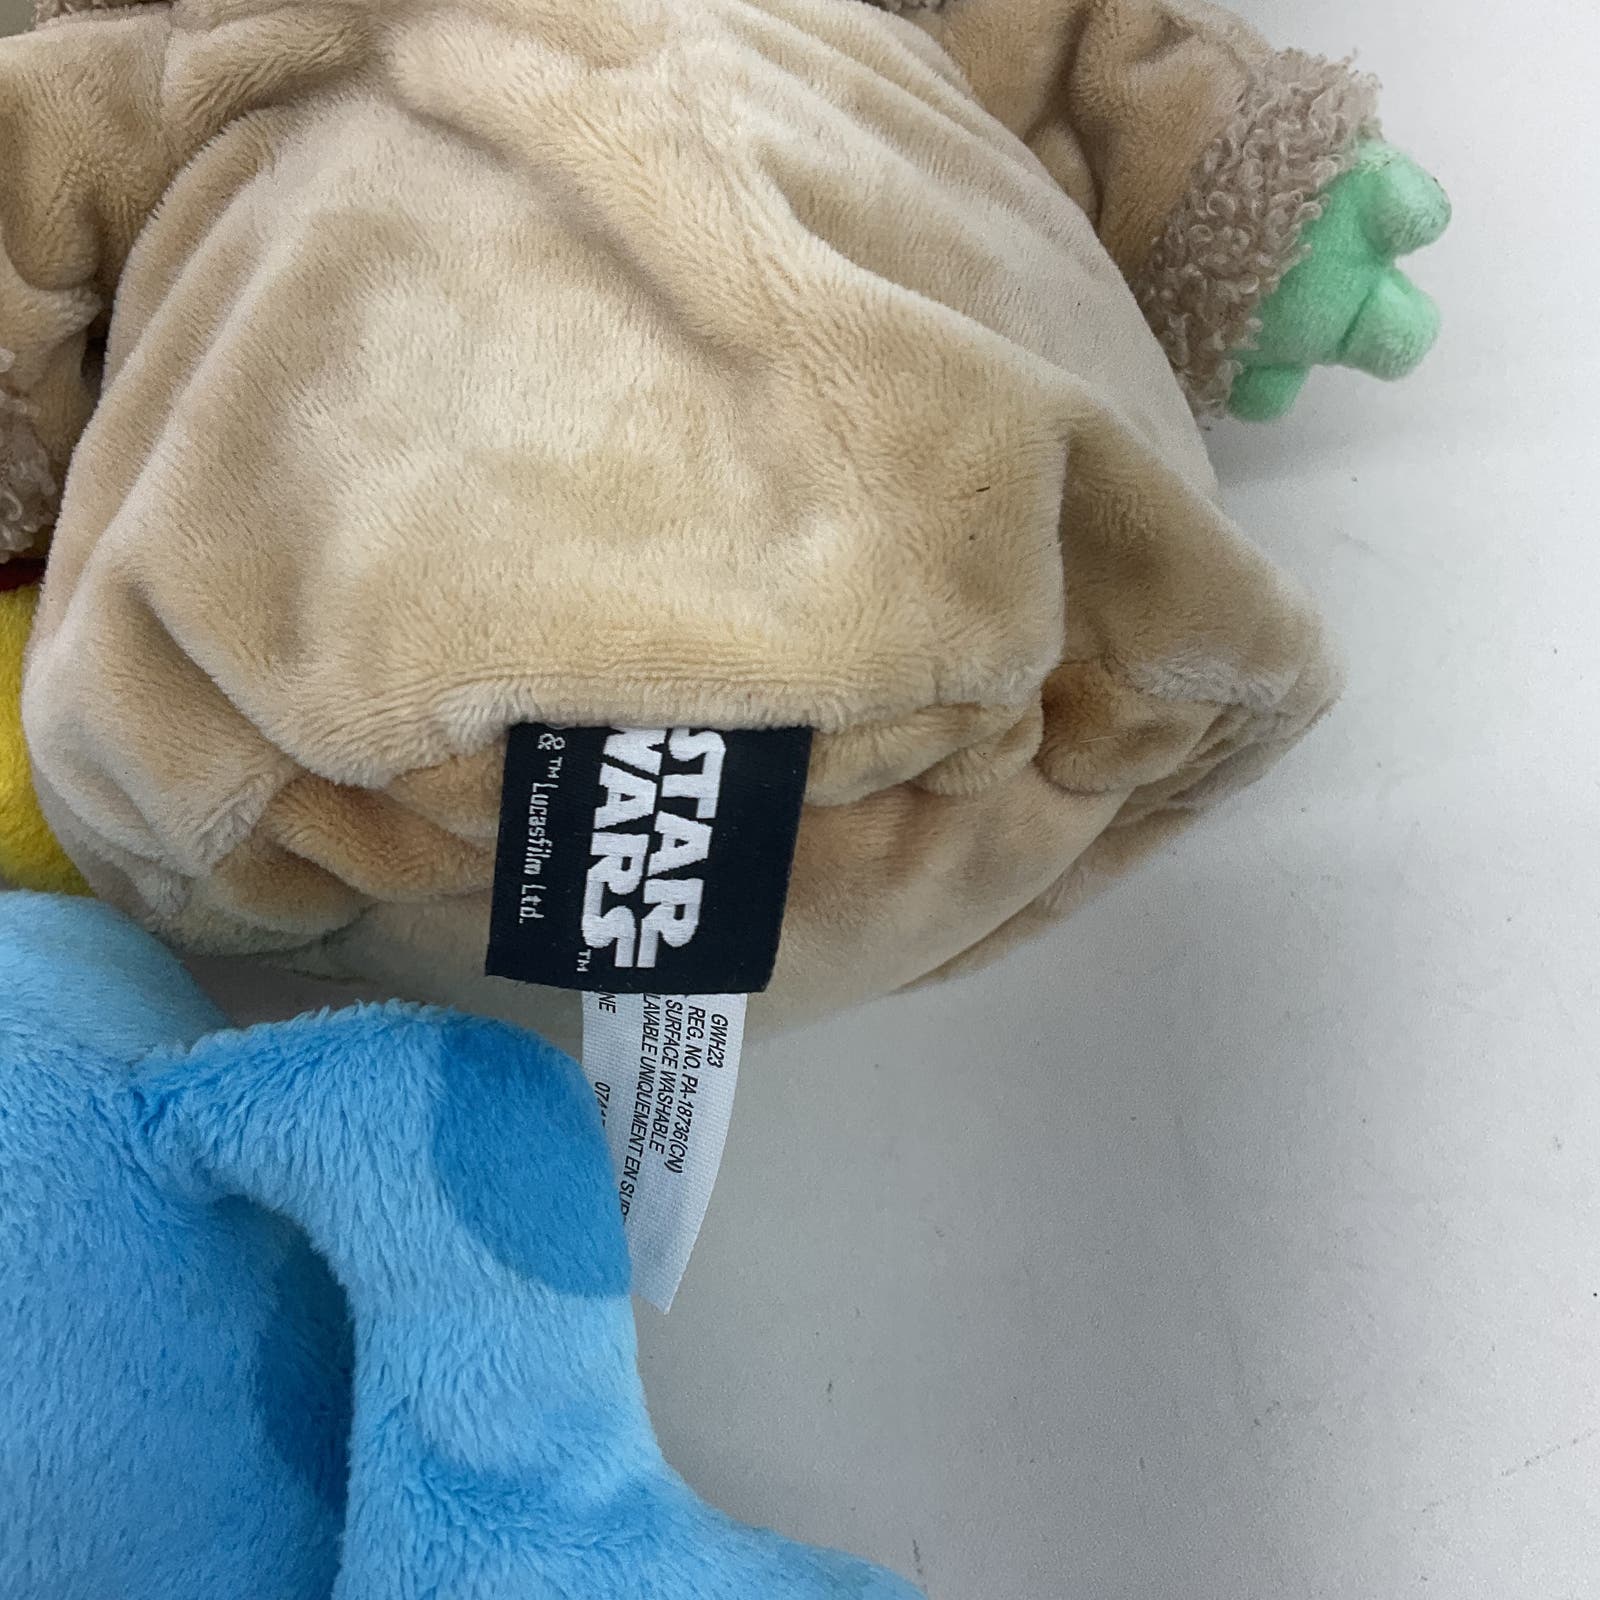 Mixed Plush LOT Star Wars Baby Grogu Daniel Tiger Blues Clues Dog Stuffed toys - Warehouse Toys